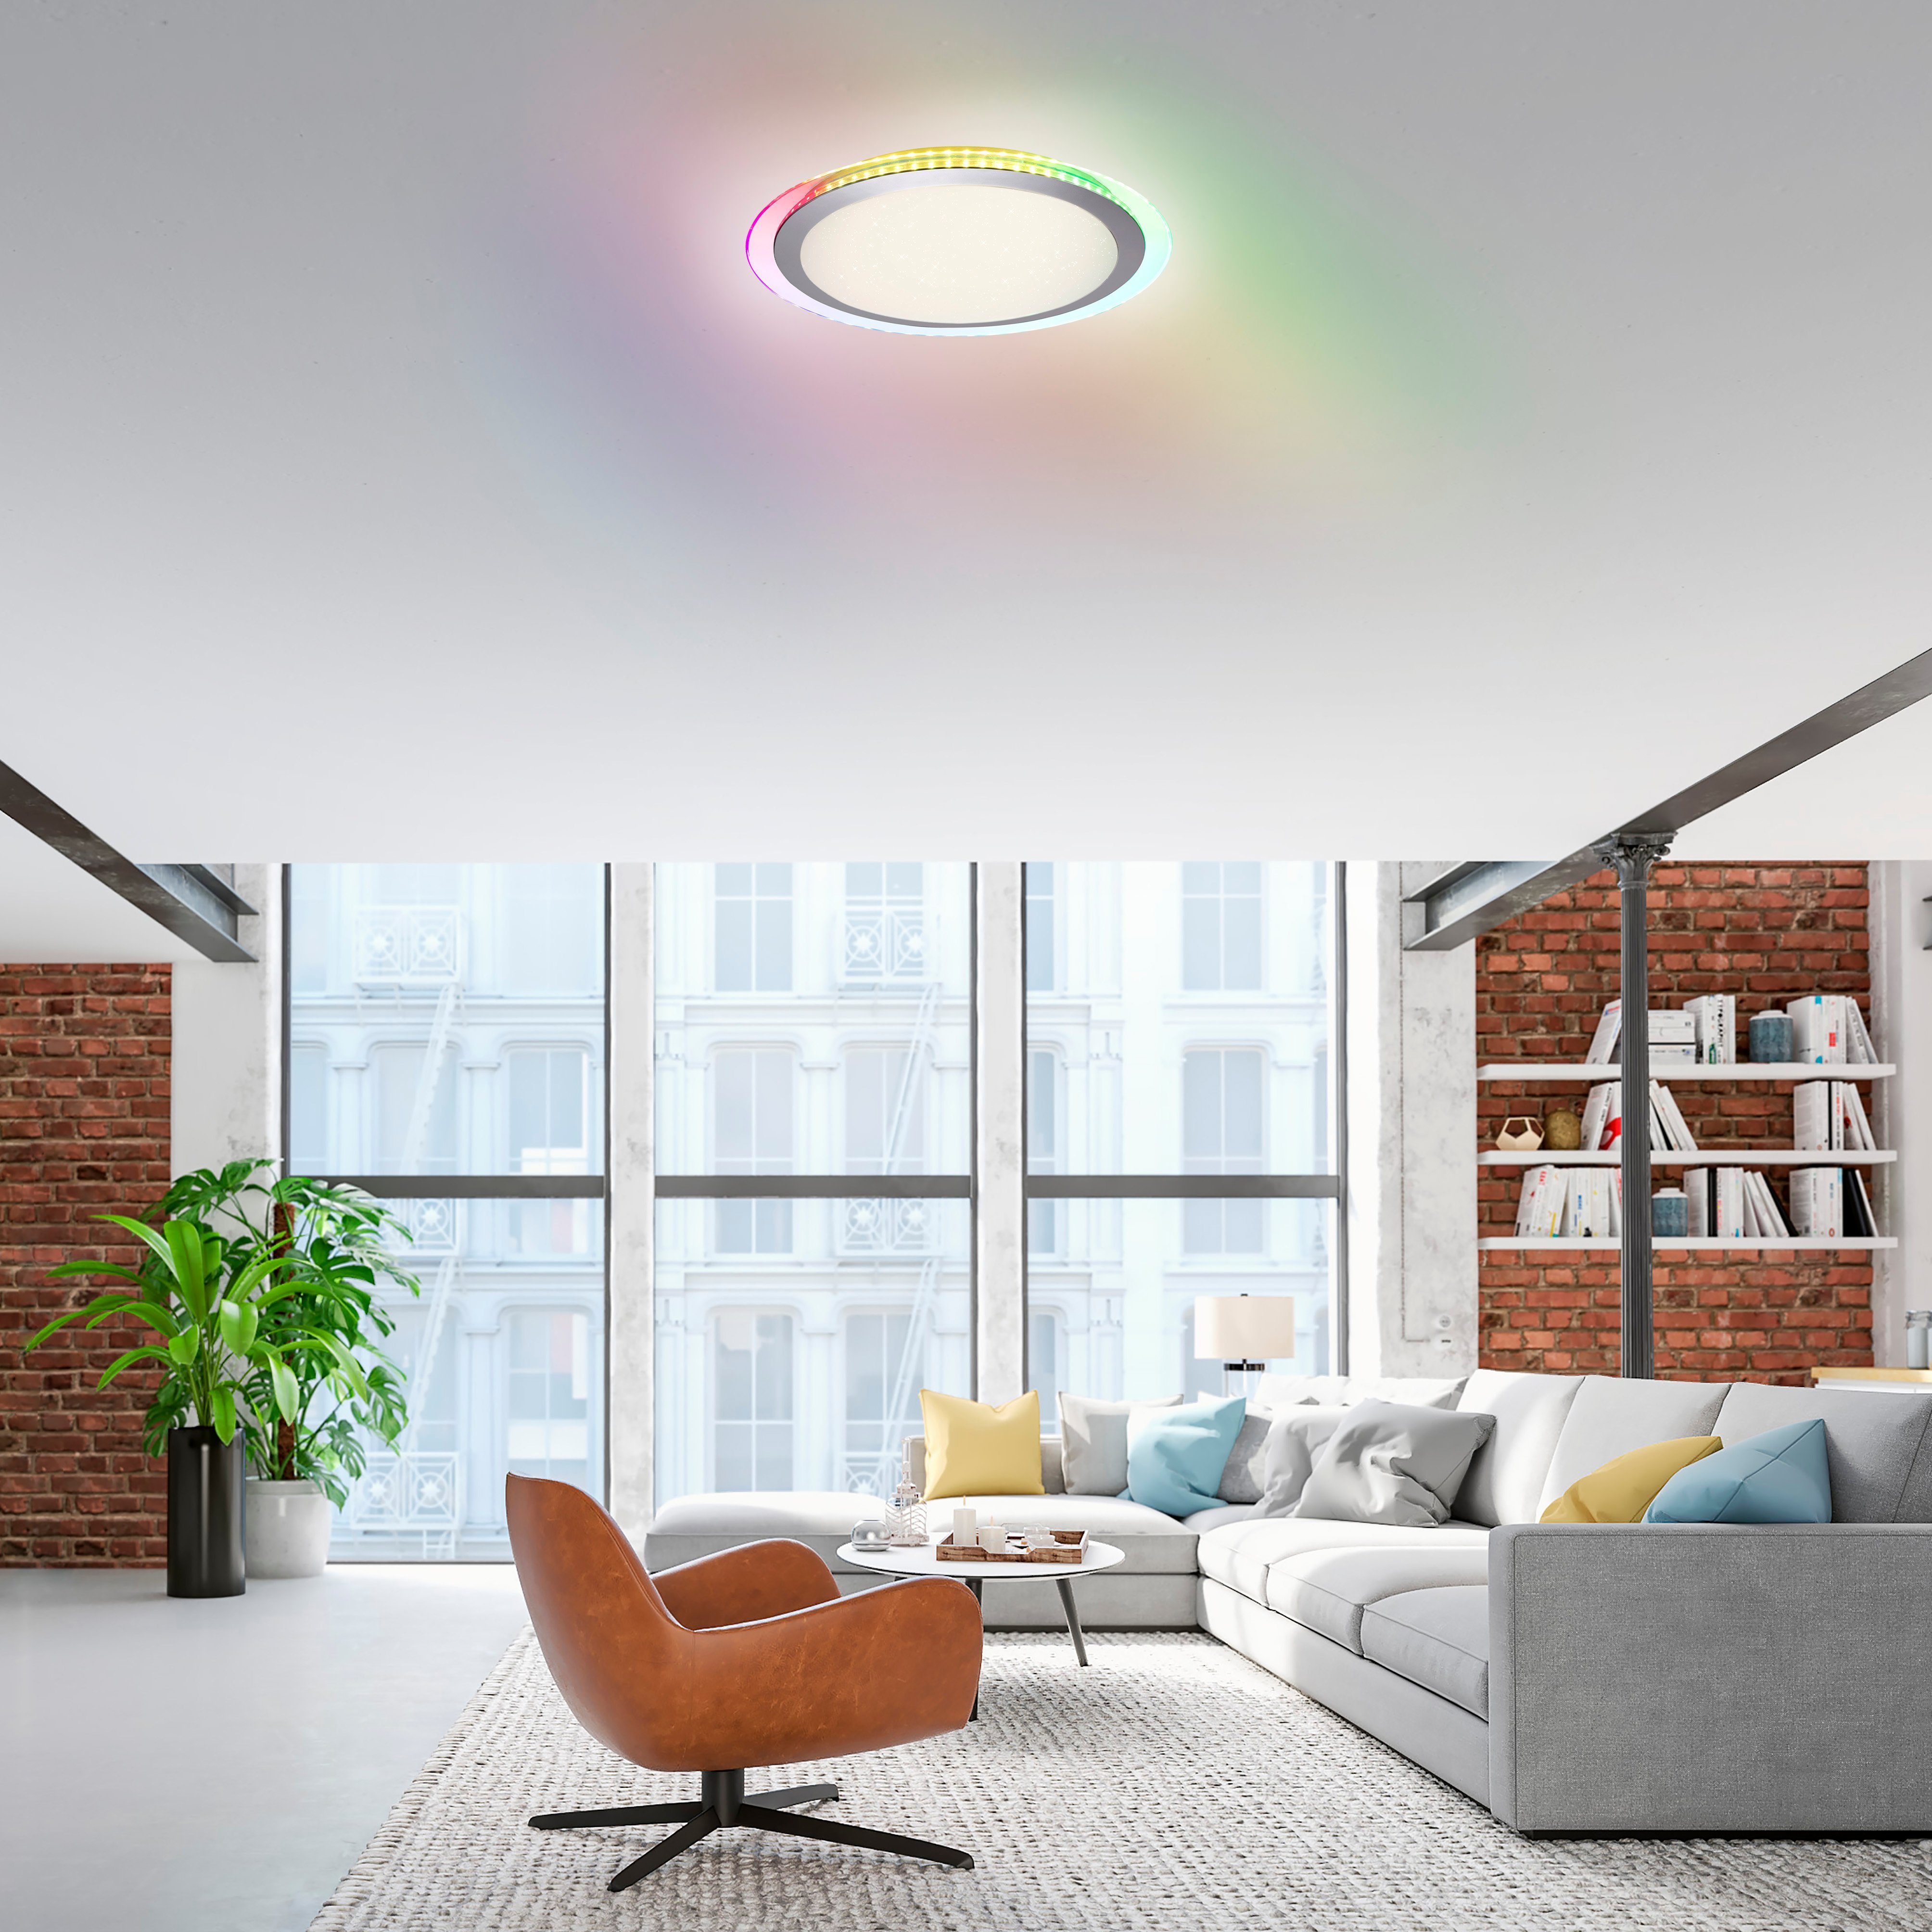 LED über CYBA, - Deckenleuchte LED, RGB-Rainbow, - Leuchten Direkt dimmbar, CCT Fernbedienung, warmweiß fest Infrarot integriert, kaltweiß,